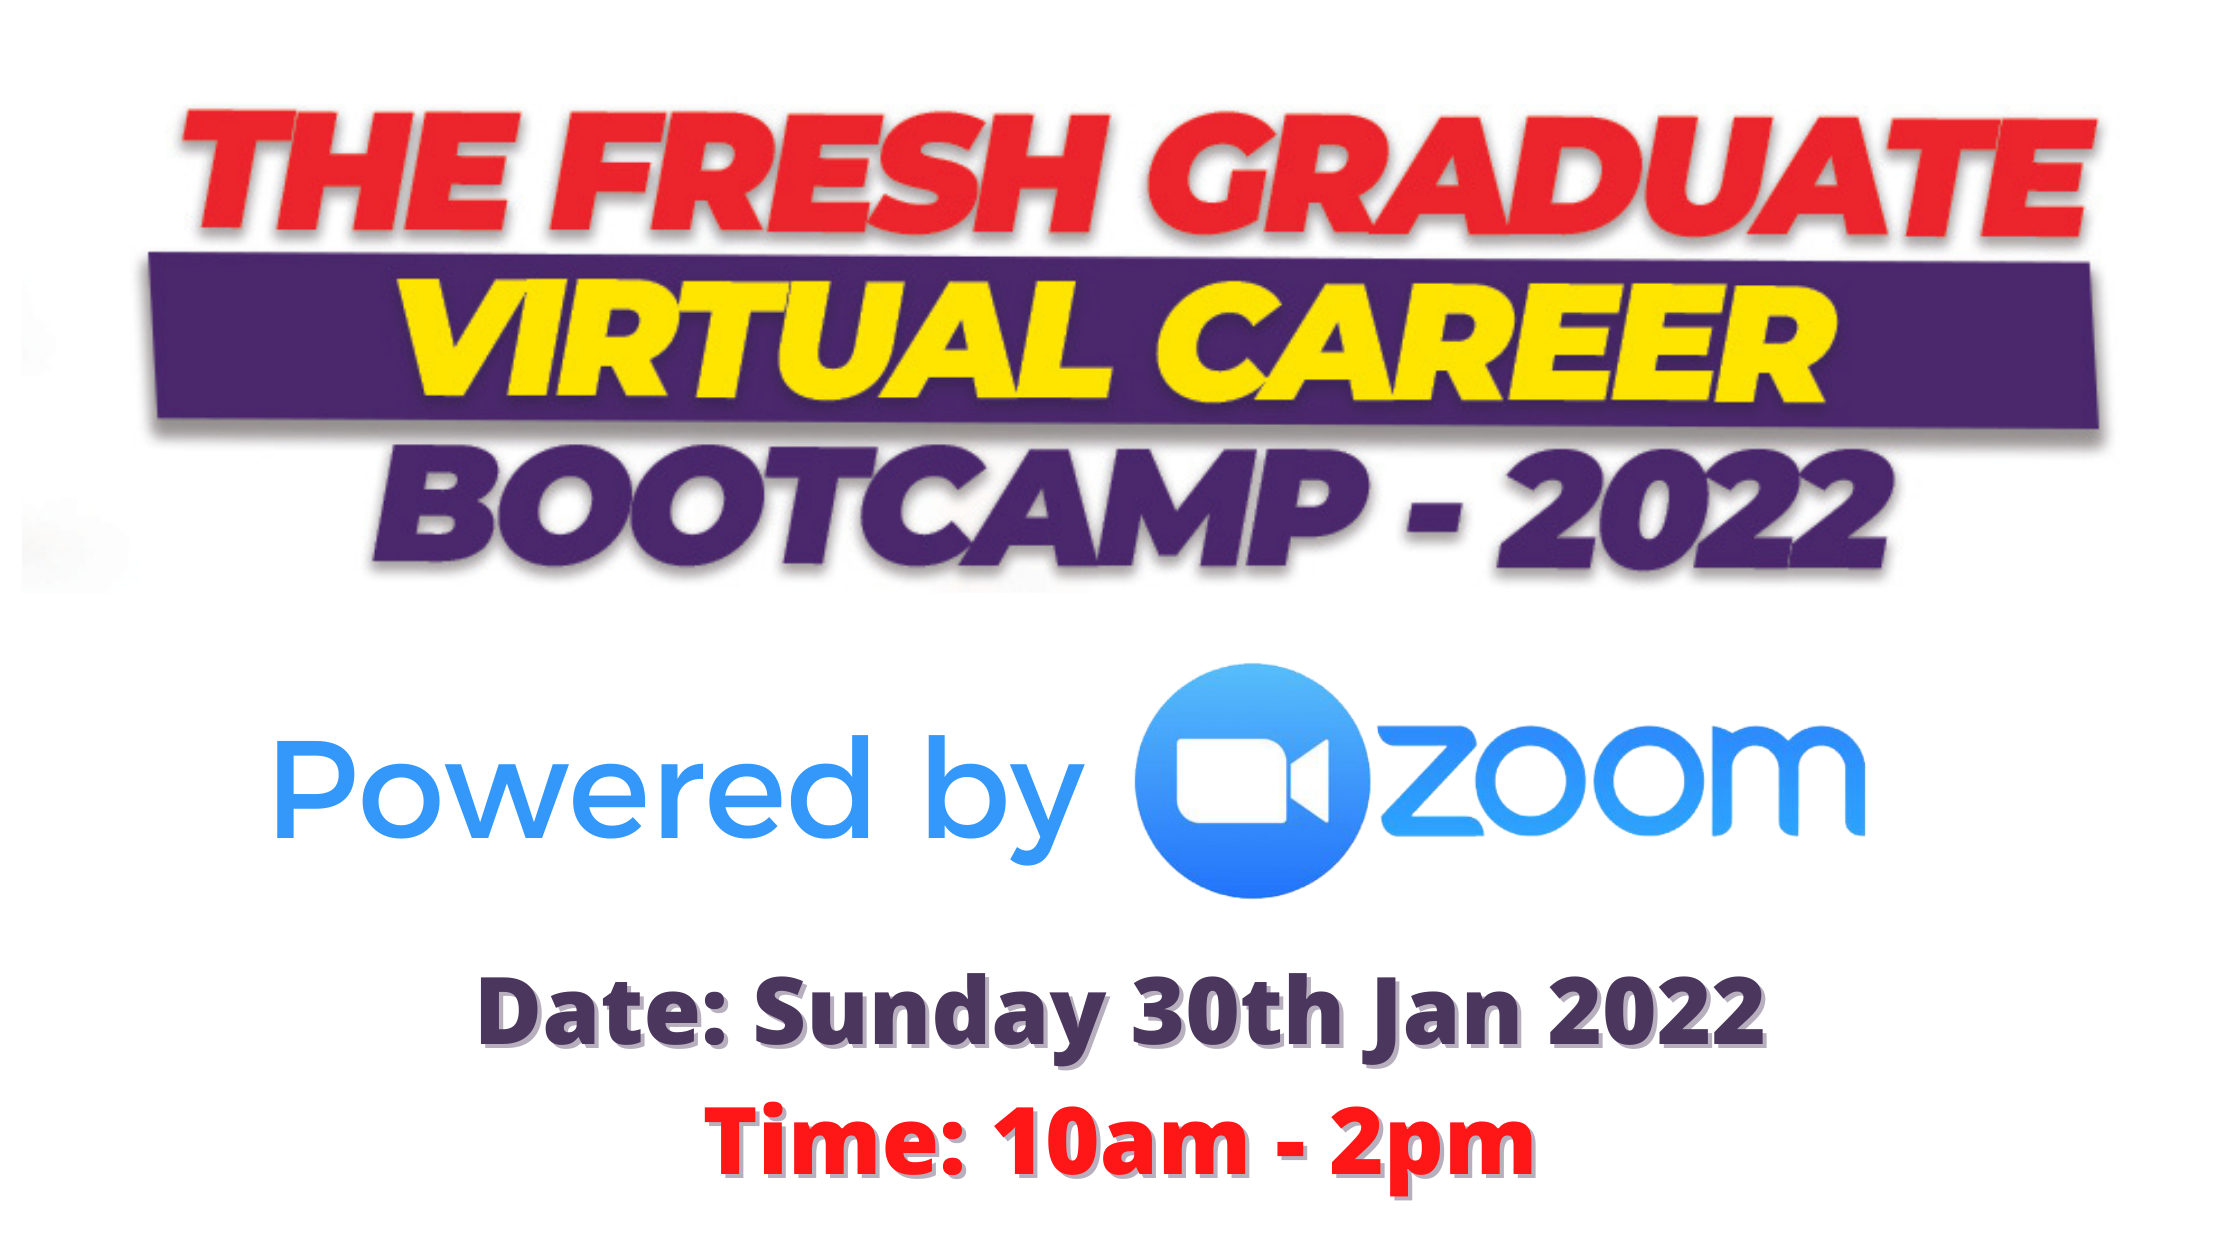 Fresher Graduate Boot camp 2022